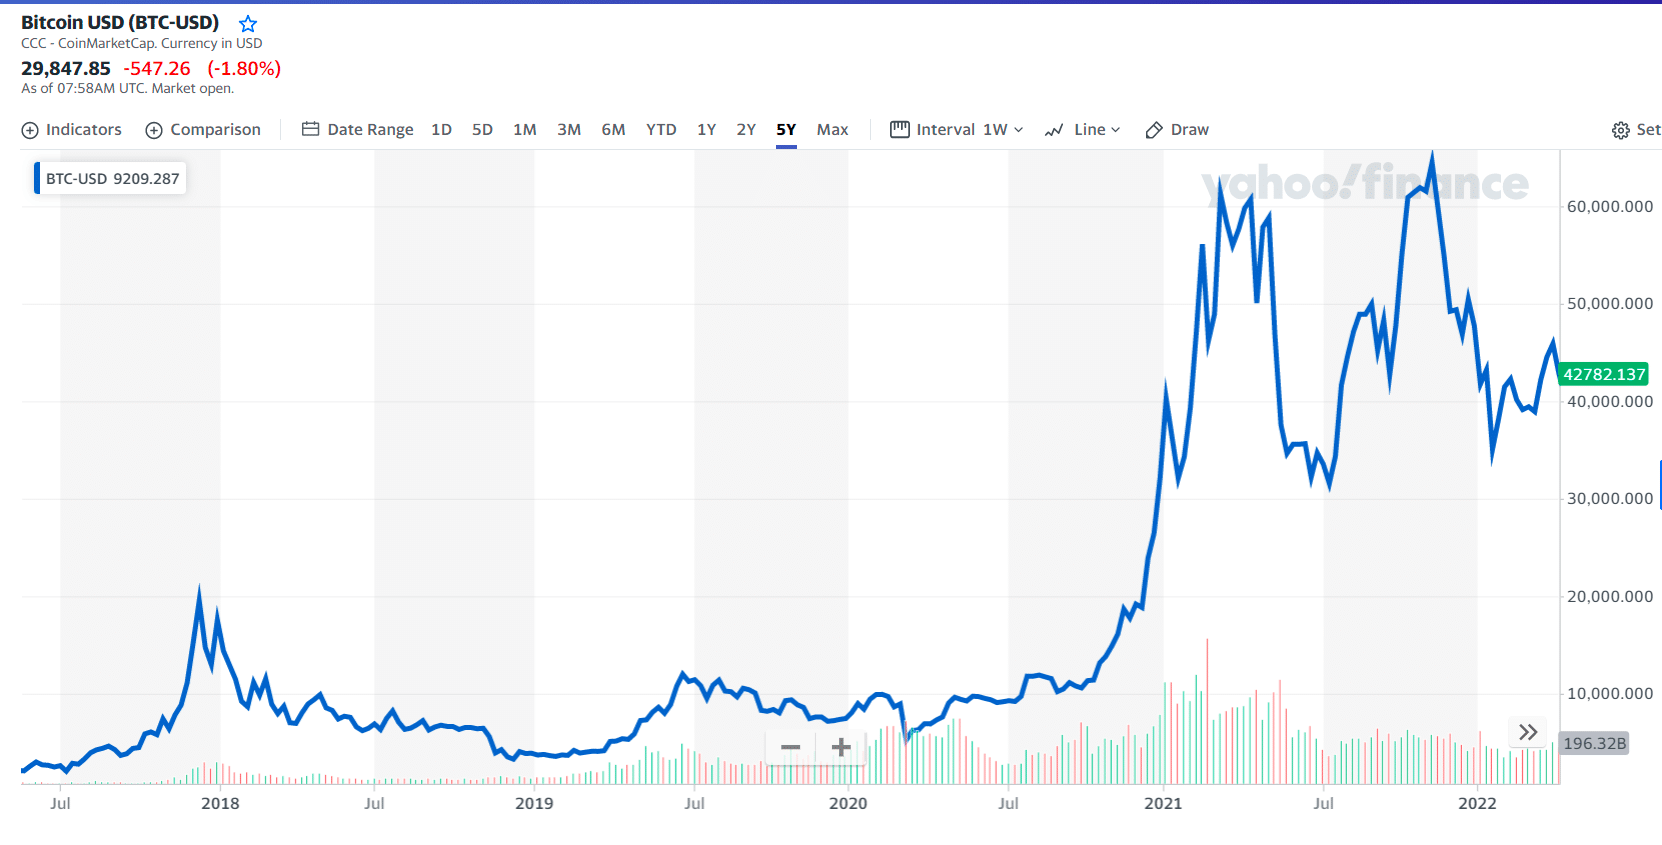 BTC/USD 5Y price chart